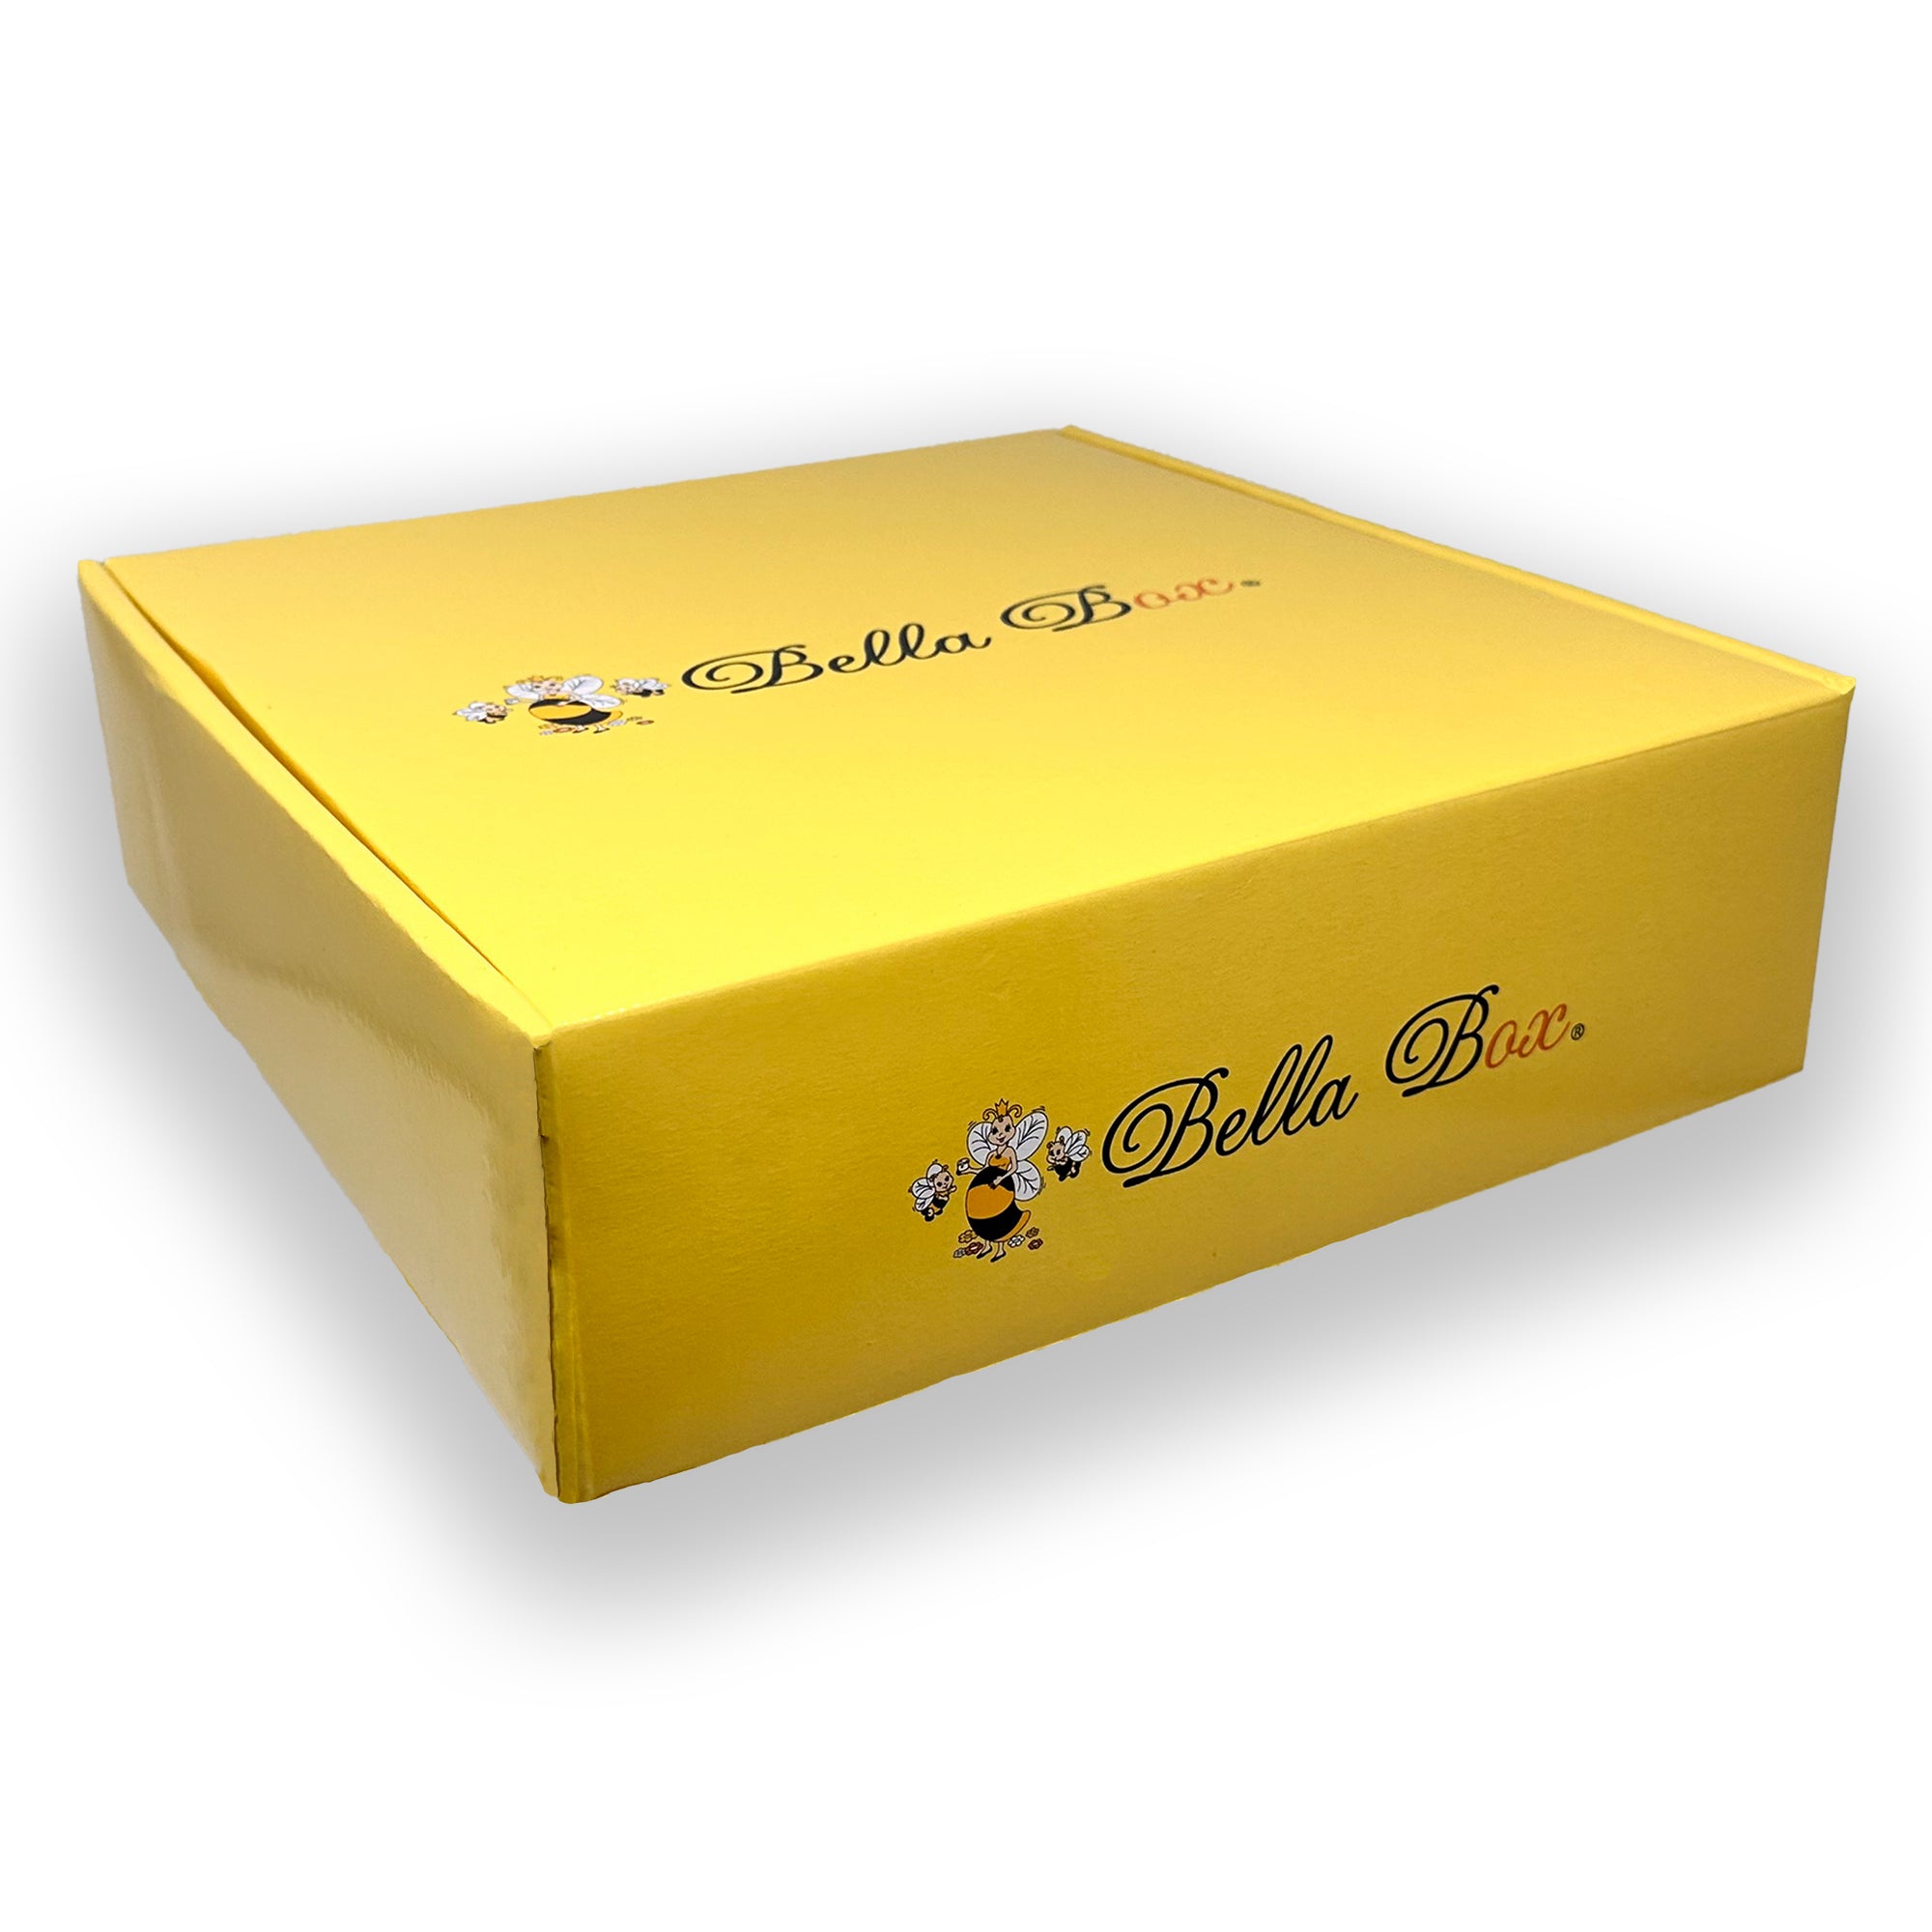 Bella B Gift Set - Baby Massage Oil 3.3 oz and Silk & Honey Baby Lotion 2 oz